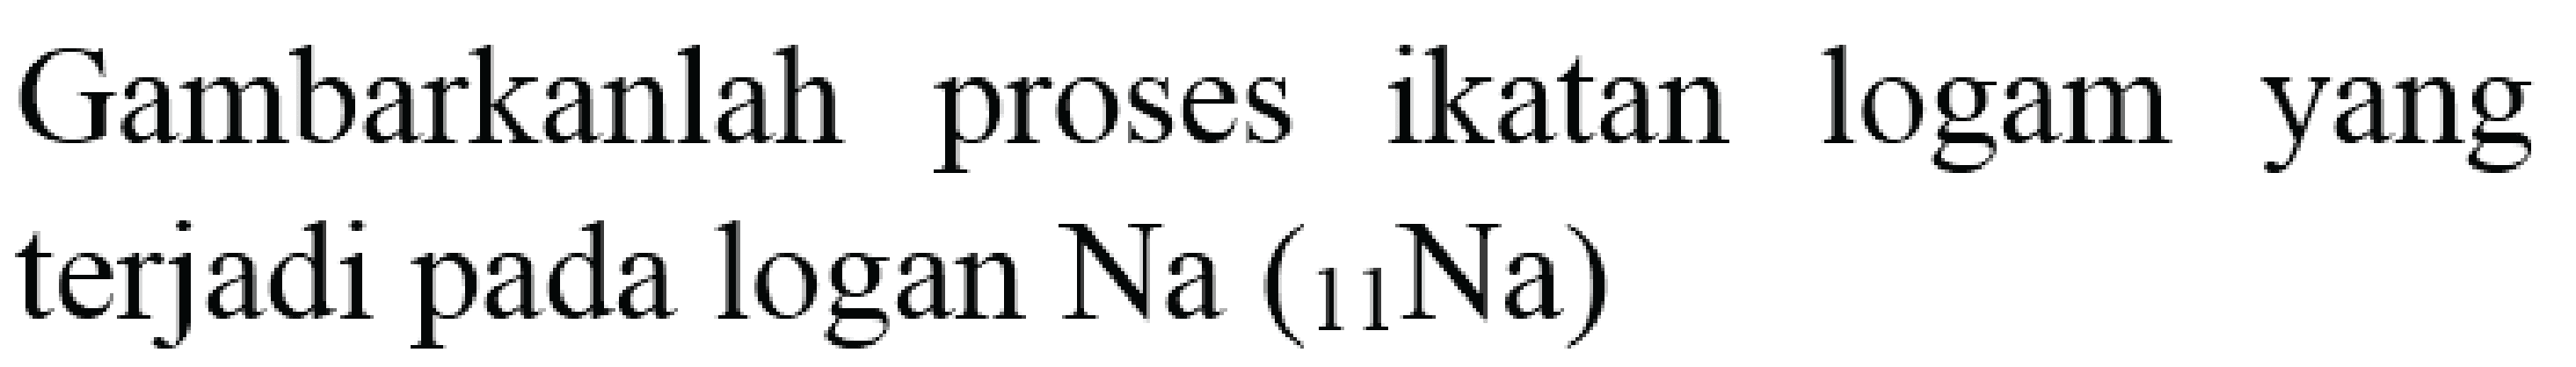 Gambarkanlah proses ikatan logam yang terjadi pada logan  Na({ )_(11) Na)